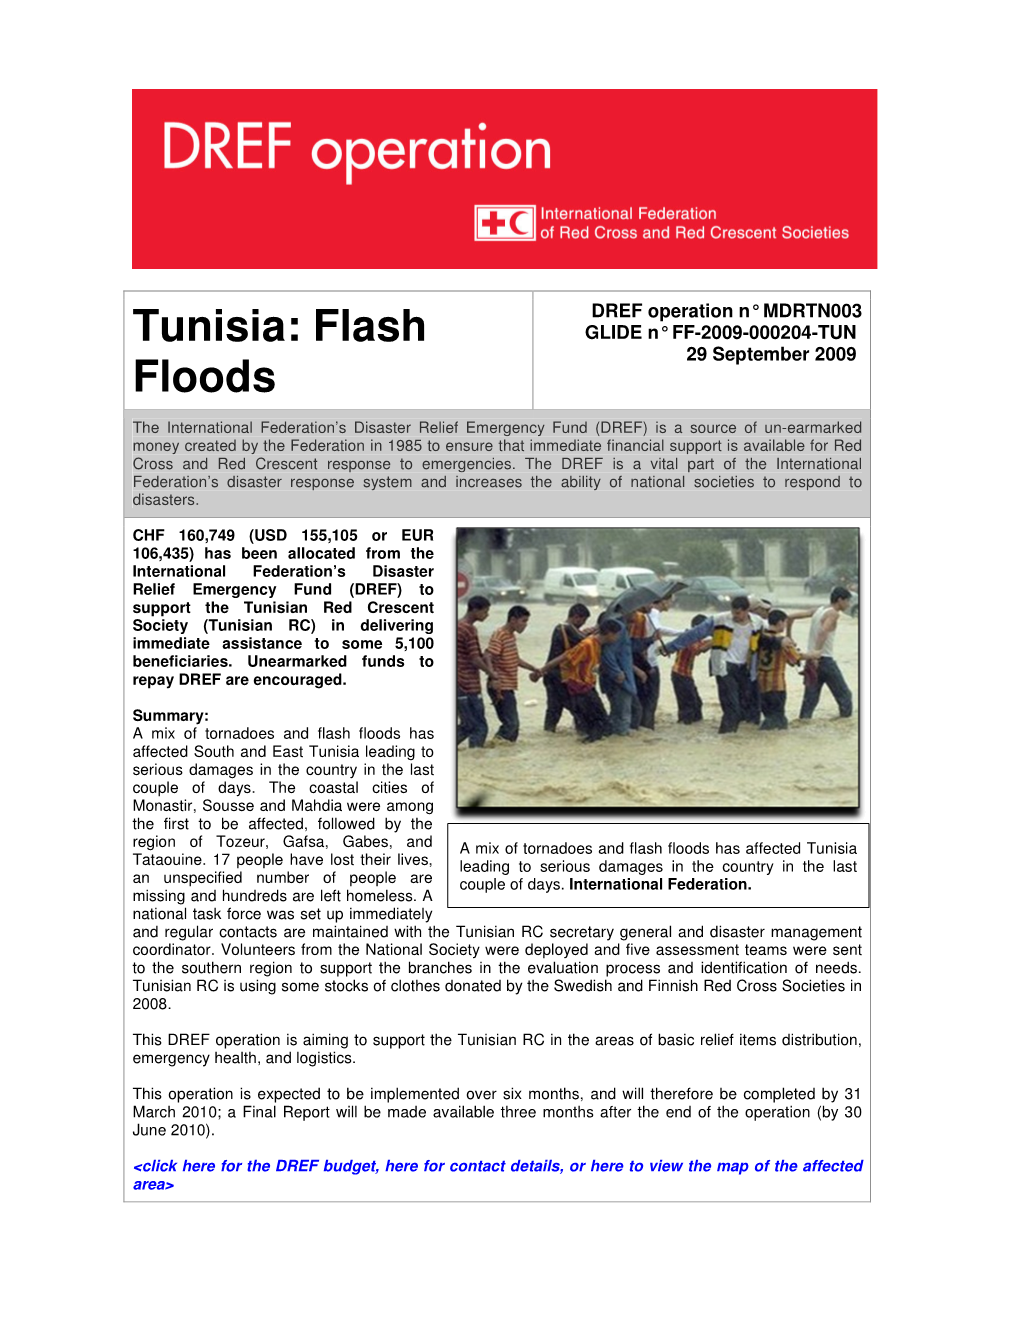 Tunisia: Flash Floods